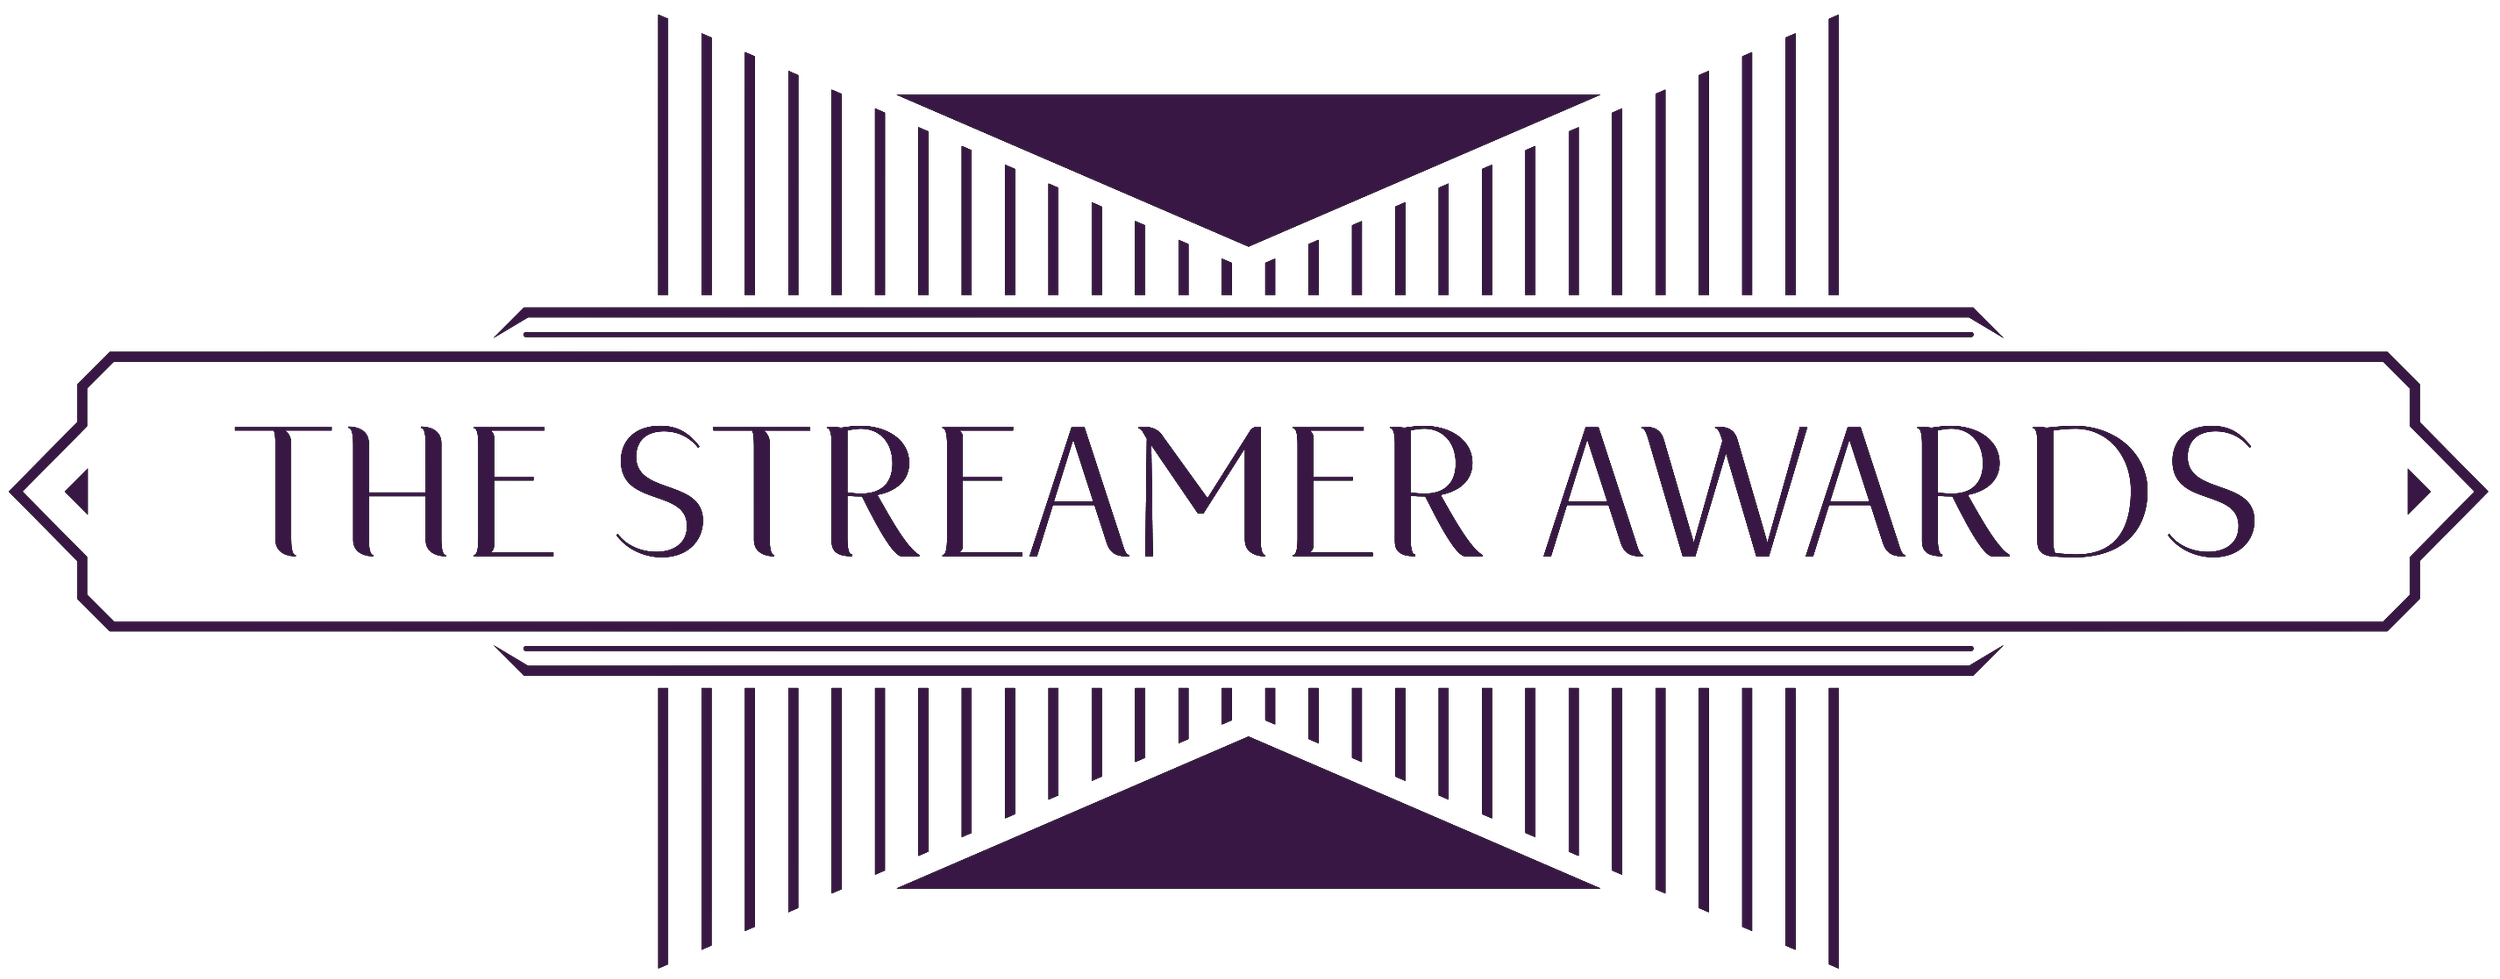 Streamer Awards.png